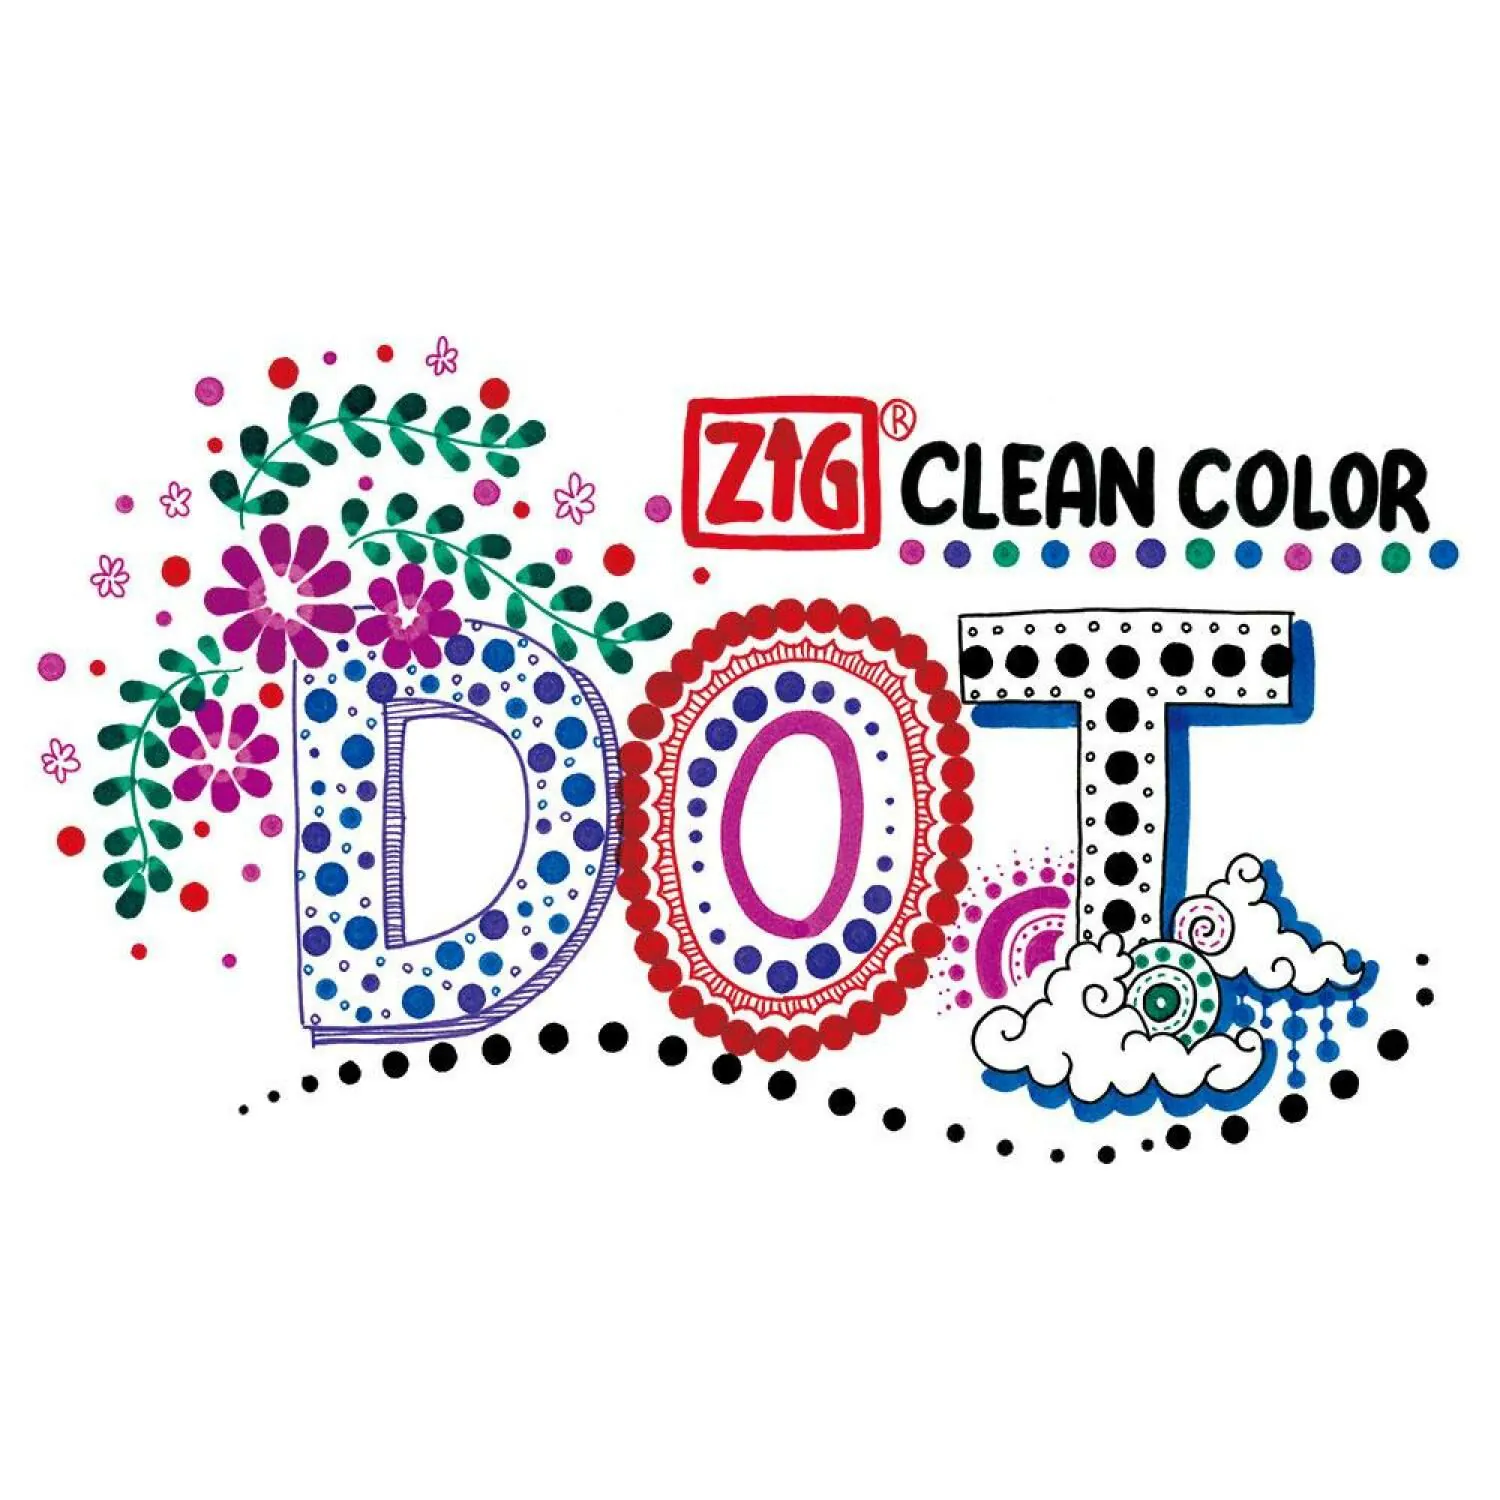 Zig dot clean color